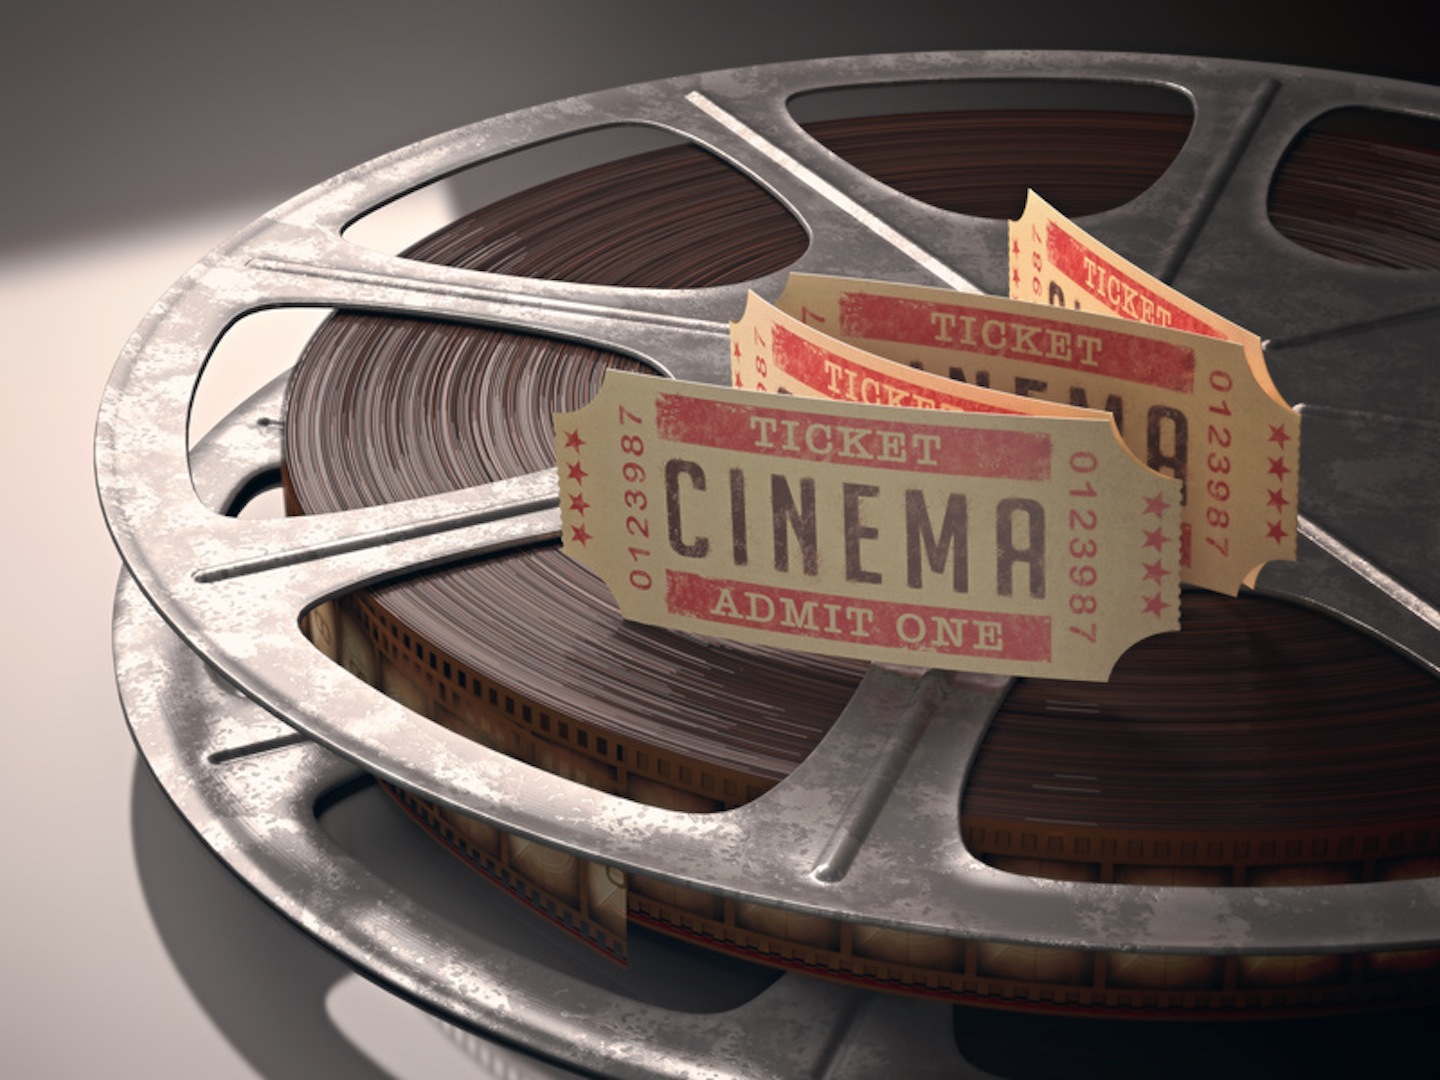 Cinema ticket over rolls of film. Concept of festival of cinema.